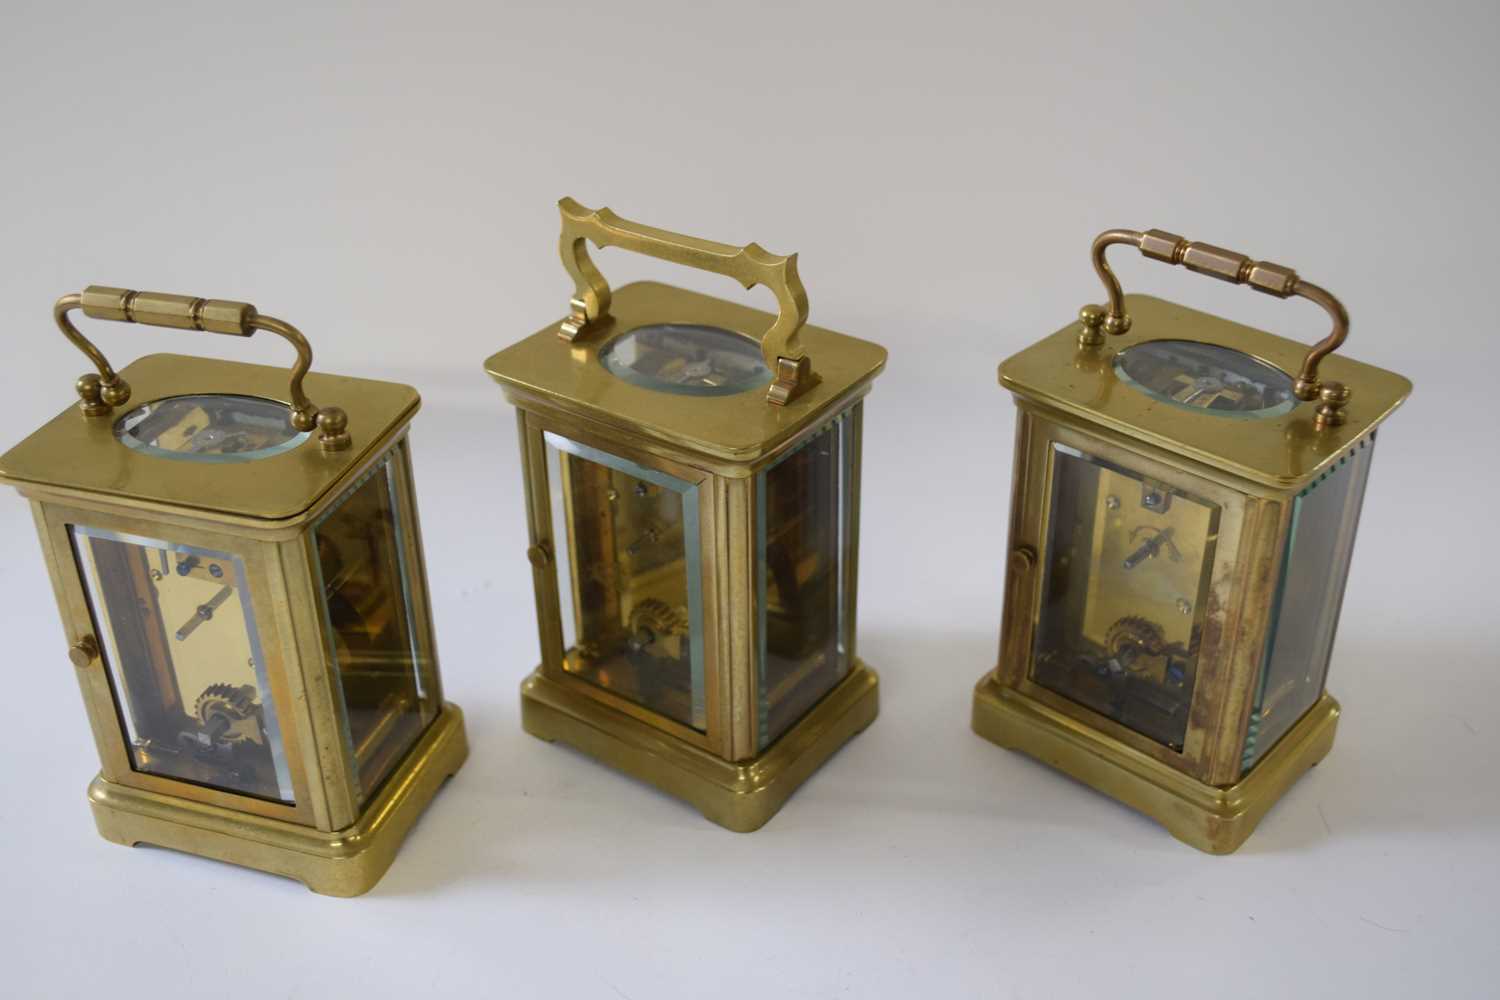 Three brass carriage clocks - Image 2 of 3